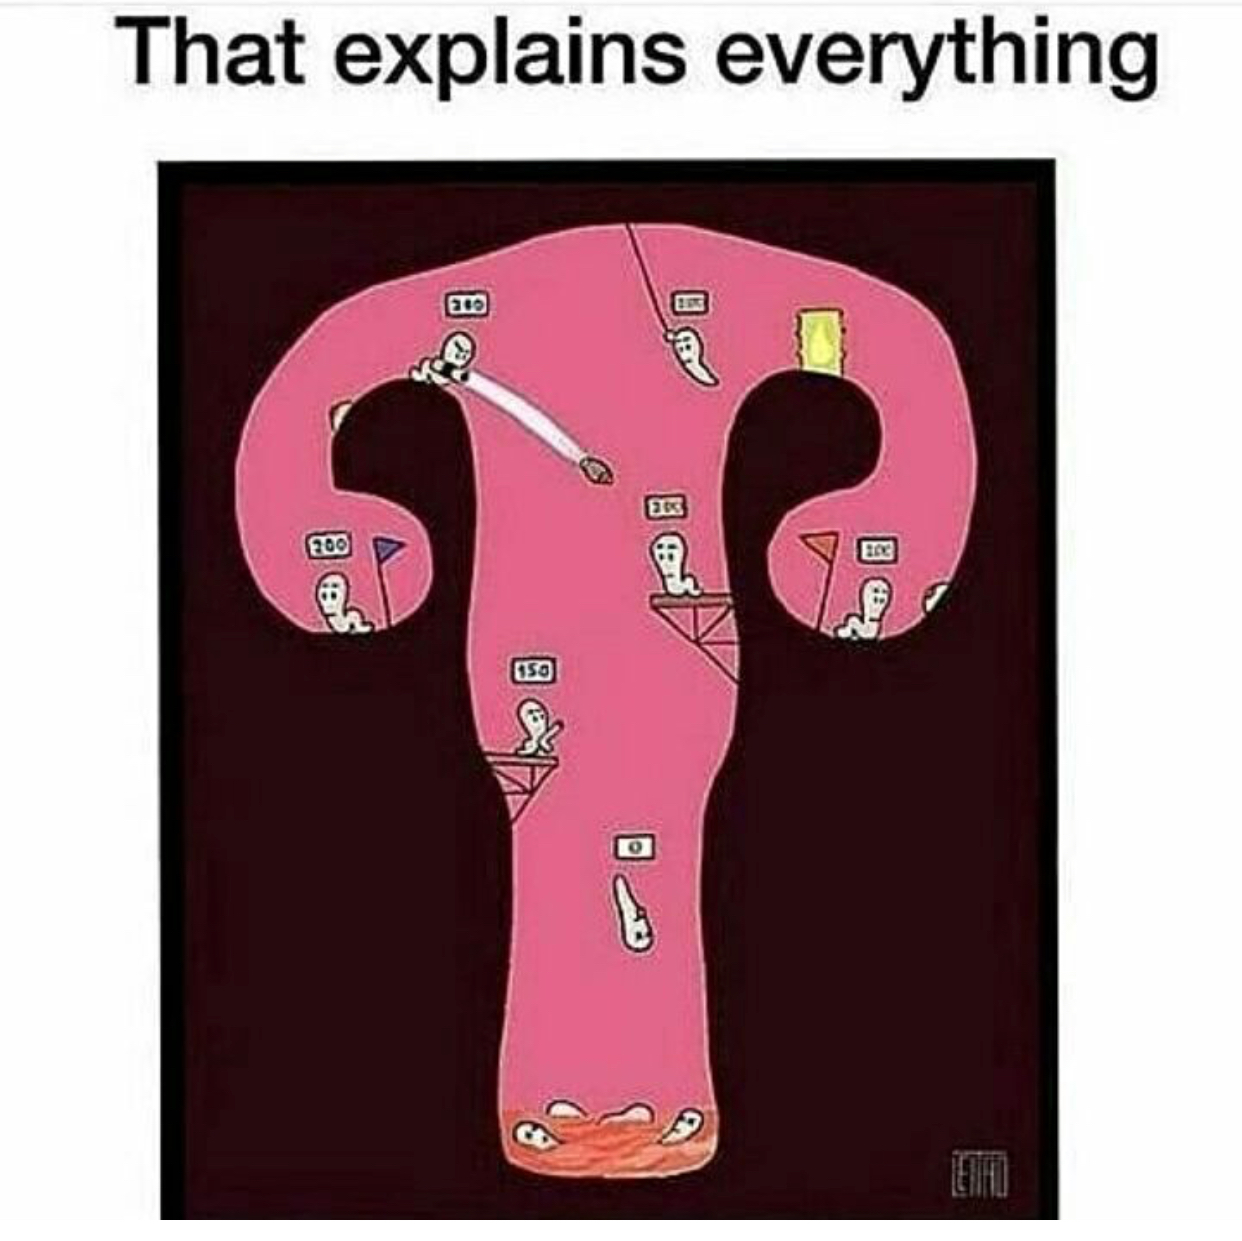 memes - worms uterus - That explains everything